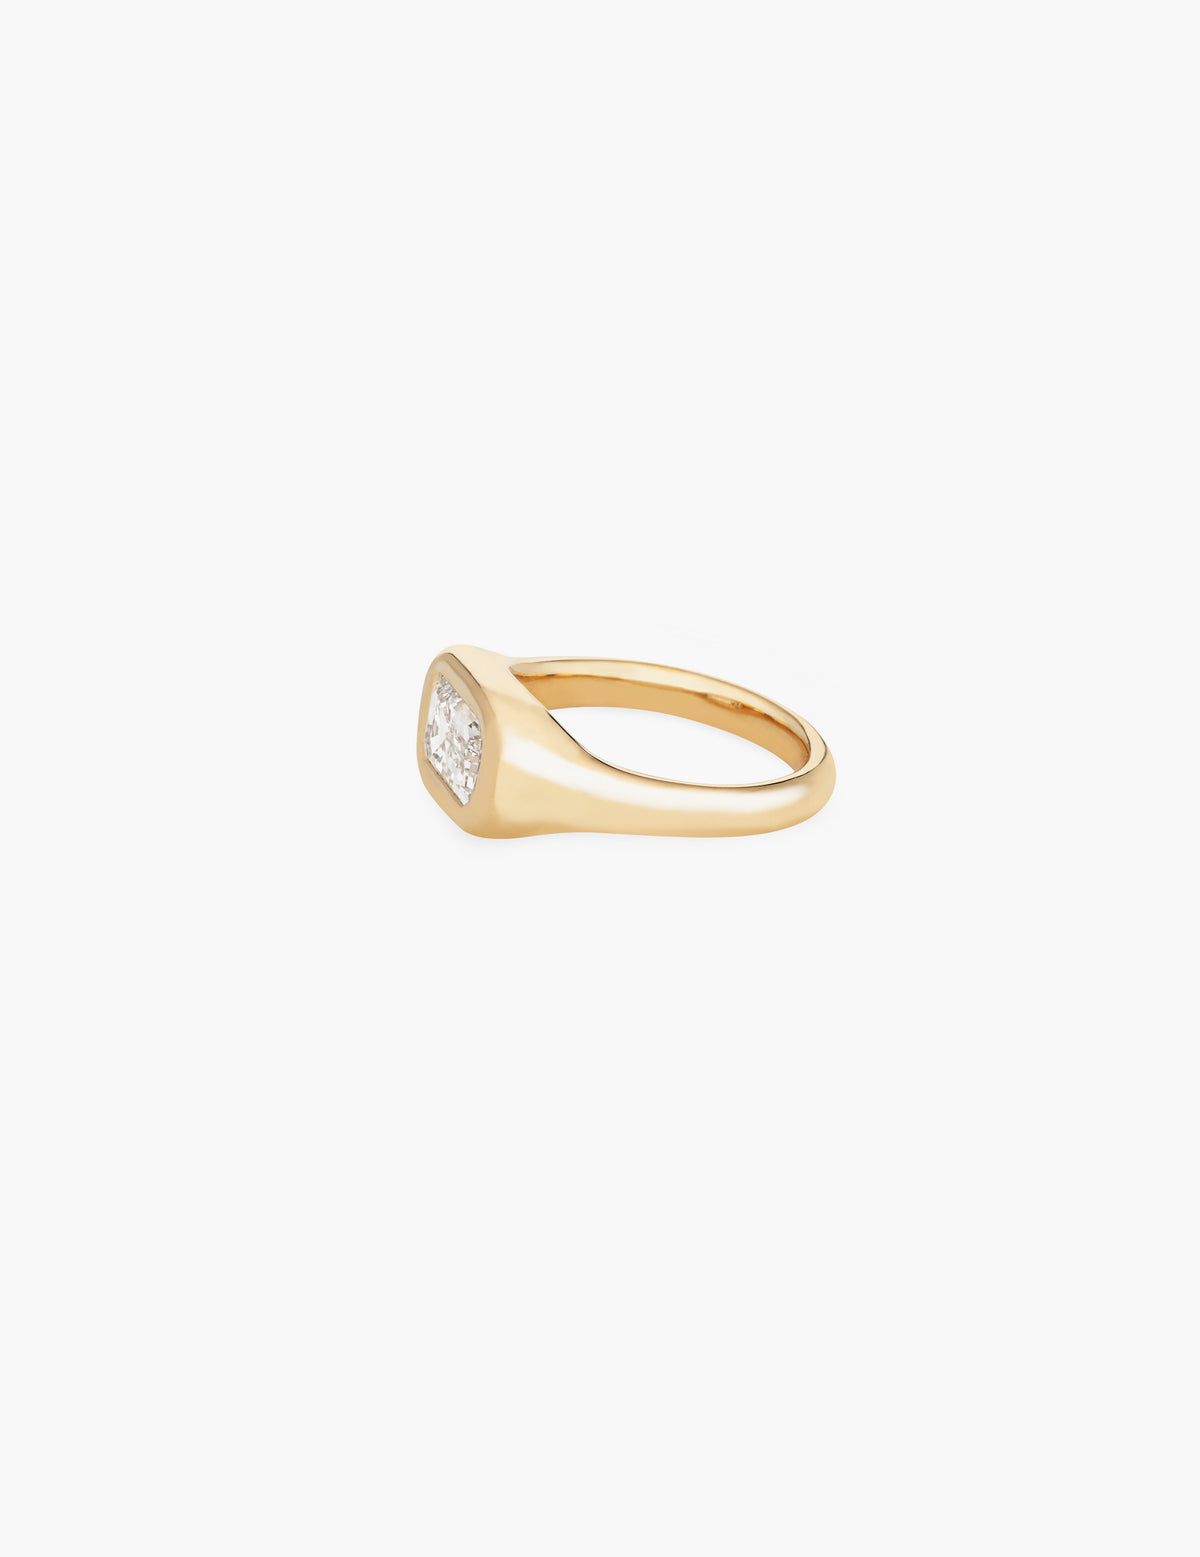 Golda Ring with 1.83ct Lab Grown Diamond